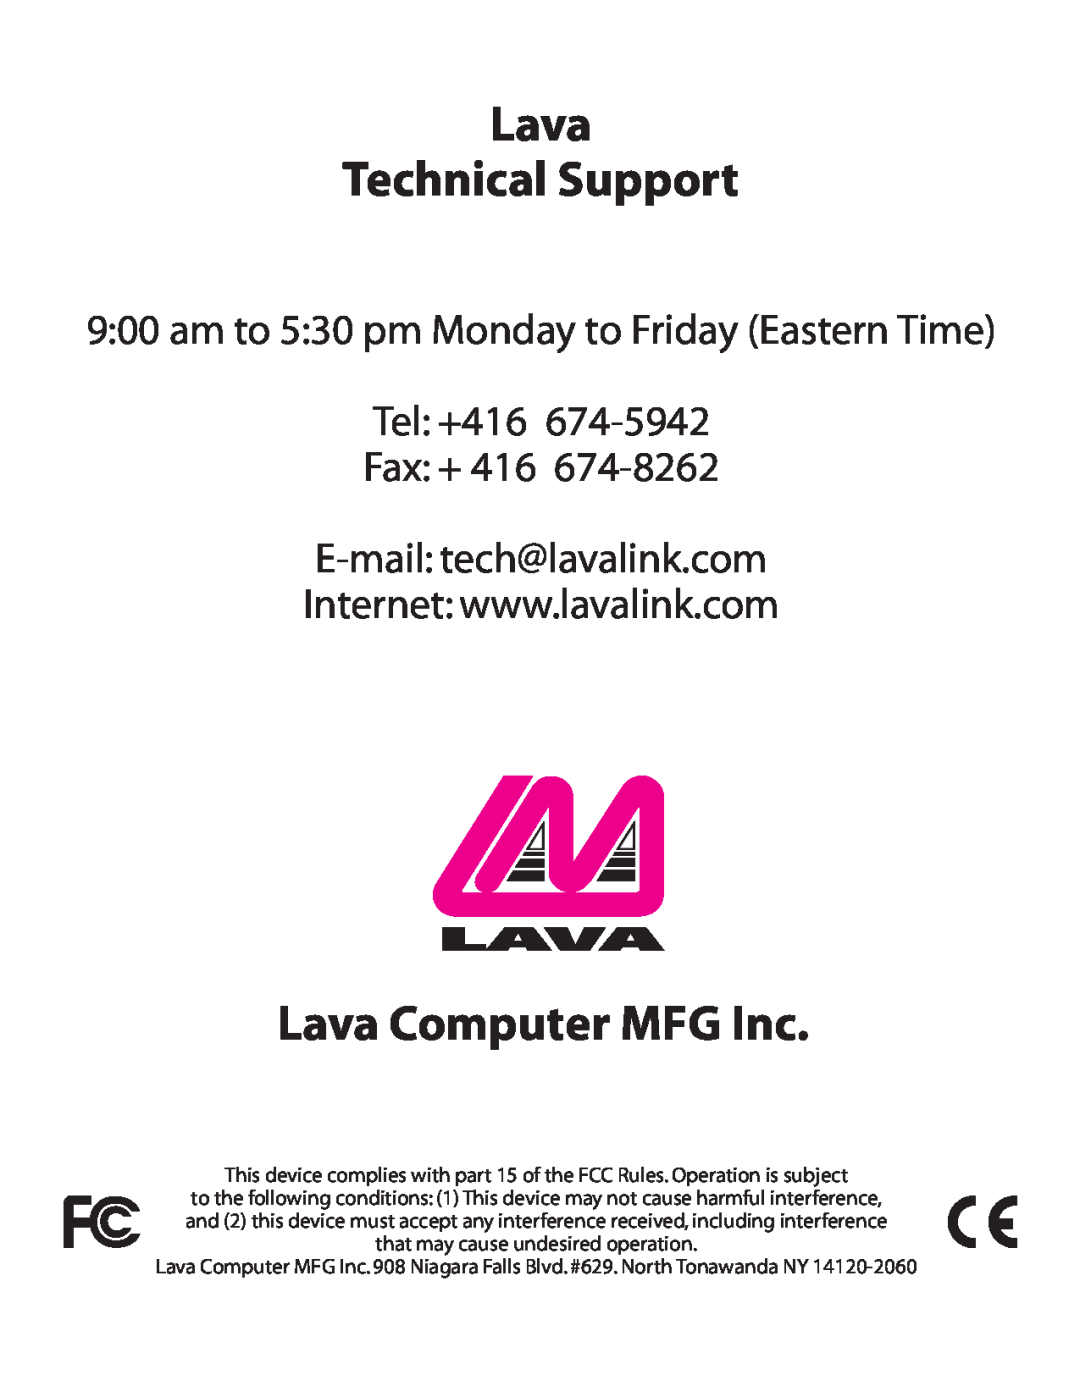 Lava Computer 650 installation manual Lava Technical Support, Lava Computer MFG Inc, E-mail tech@lavalink.com 